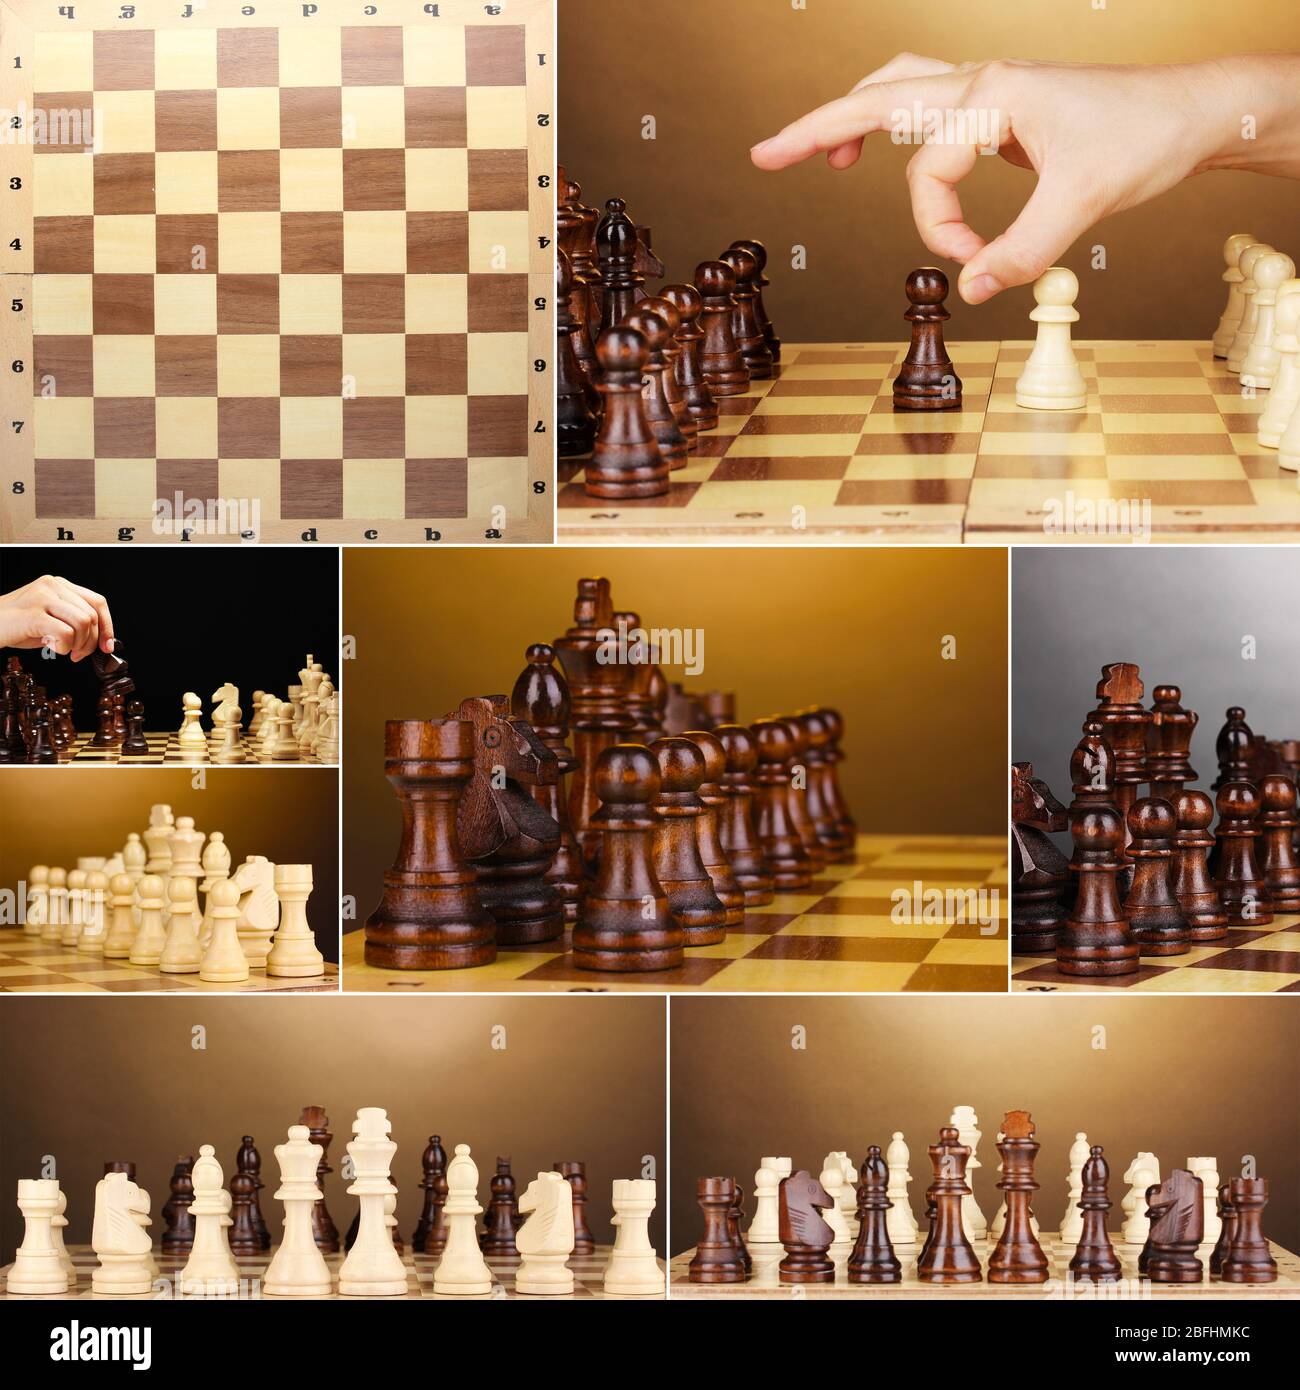 El Ajedrez  Chess board